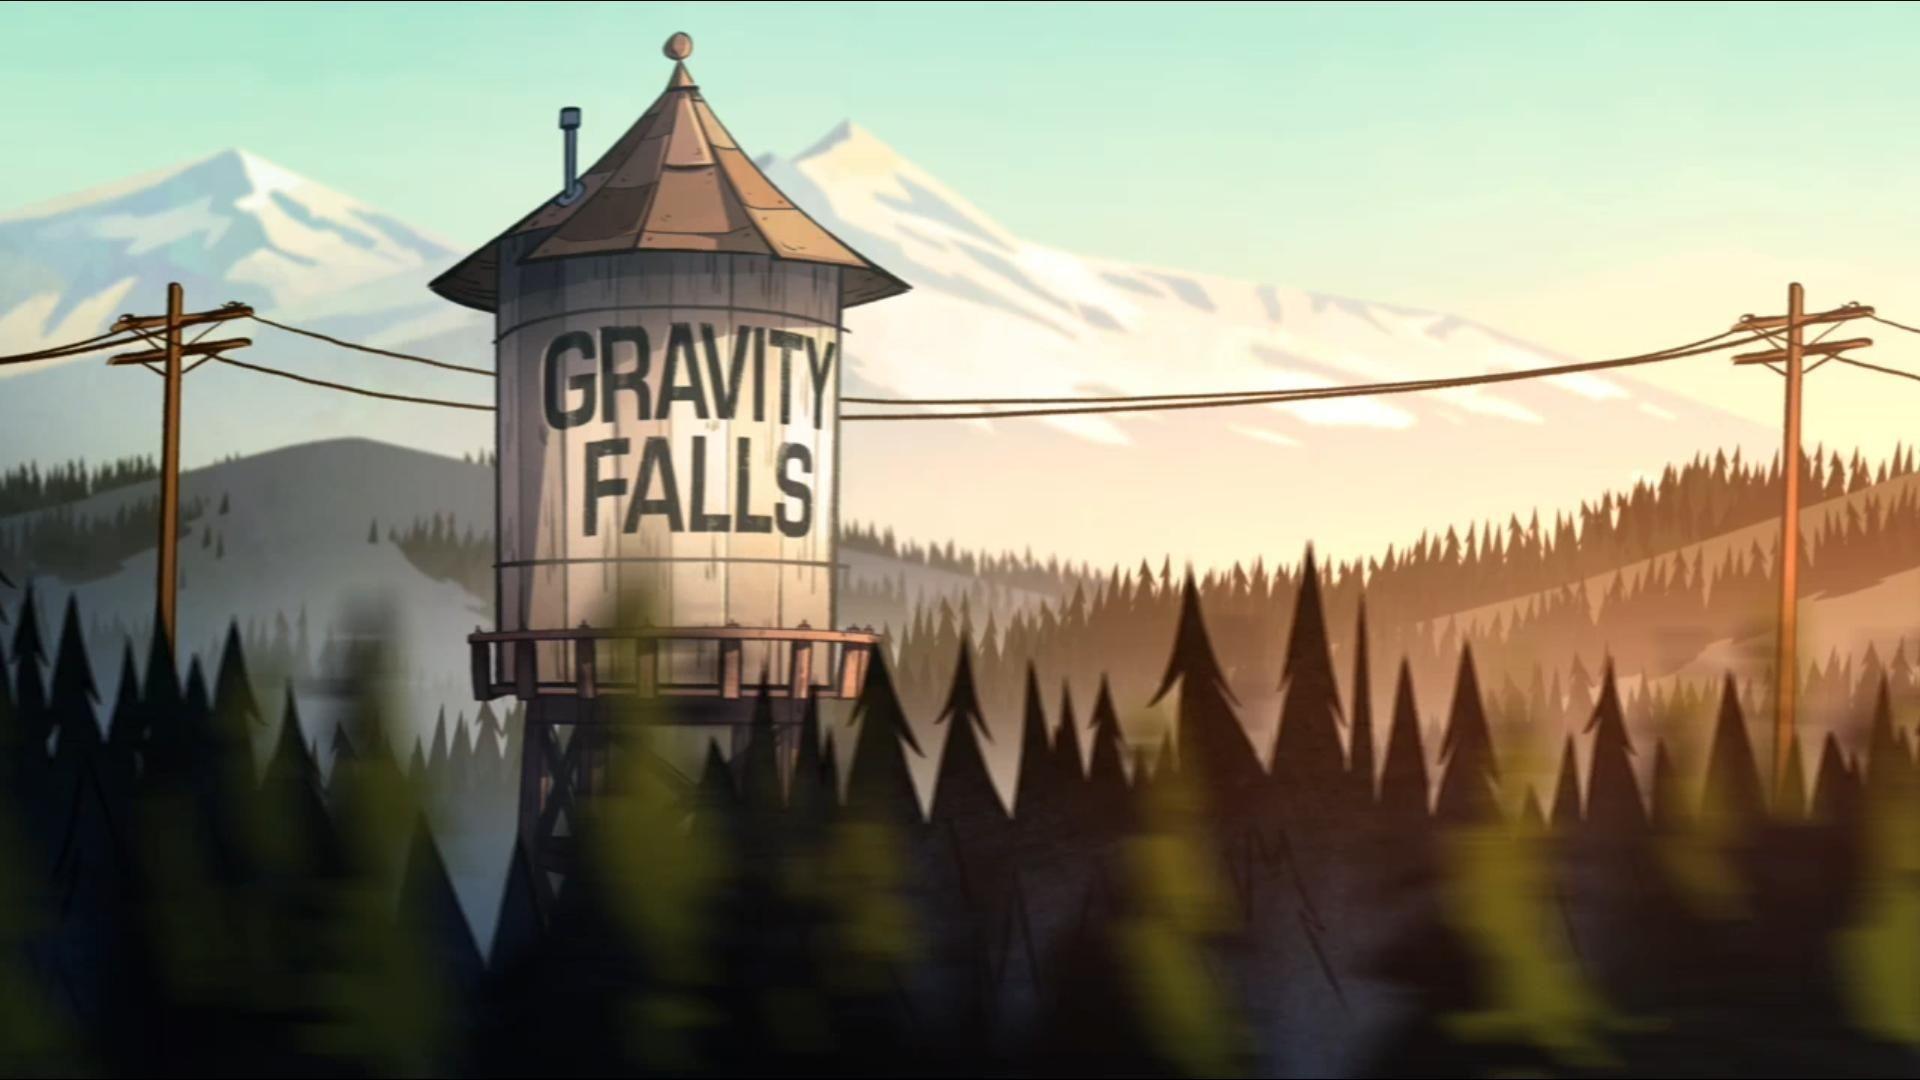 Gravity Falls wallpaper by Ahmedozal  Download on ZEDGE  9170